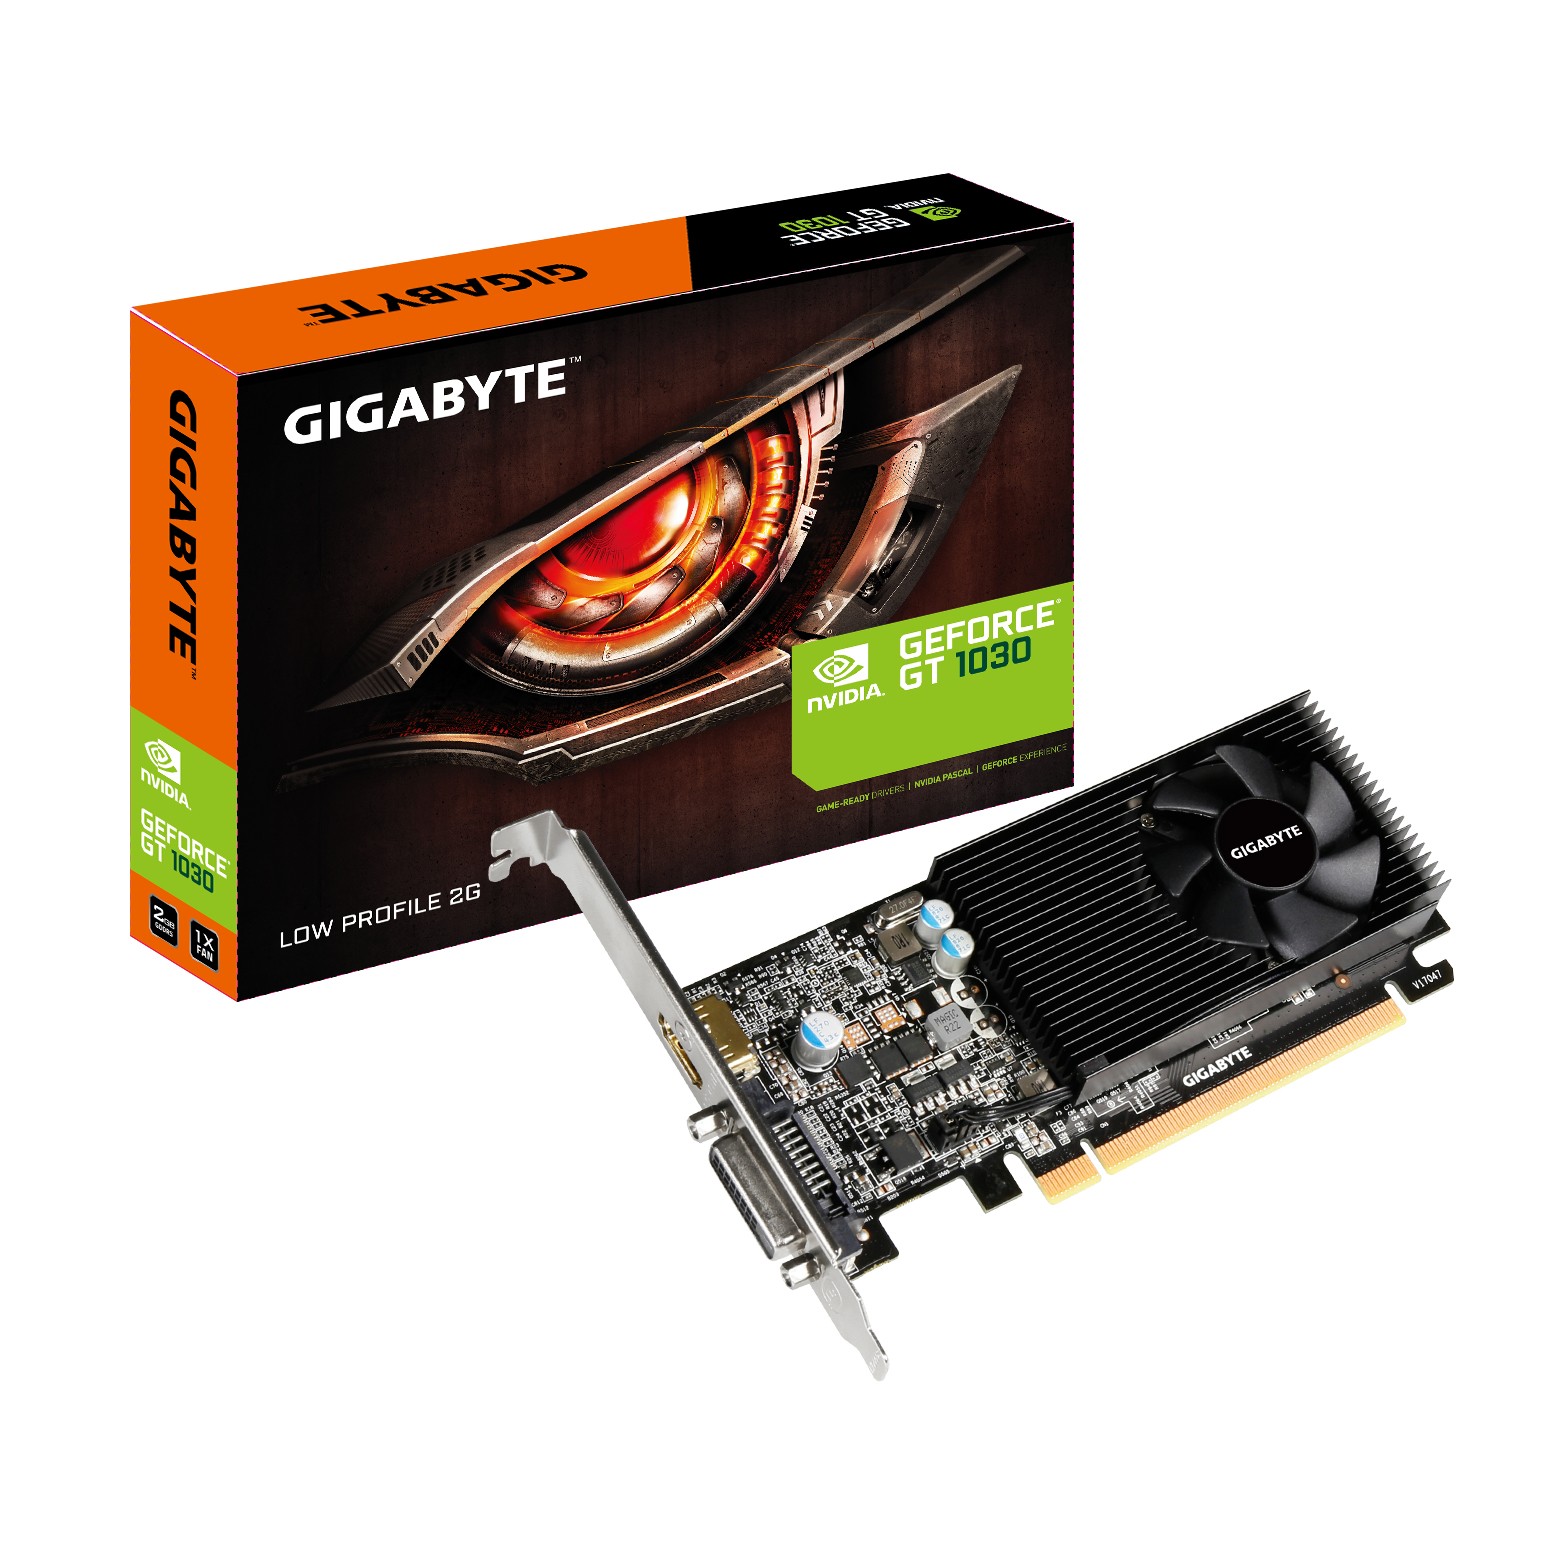 VGA Gigabyte GeForce GT 1030 2GB low profile